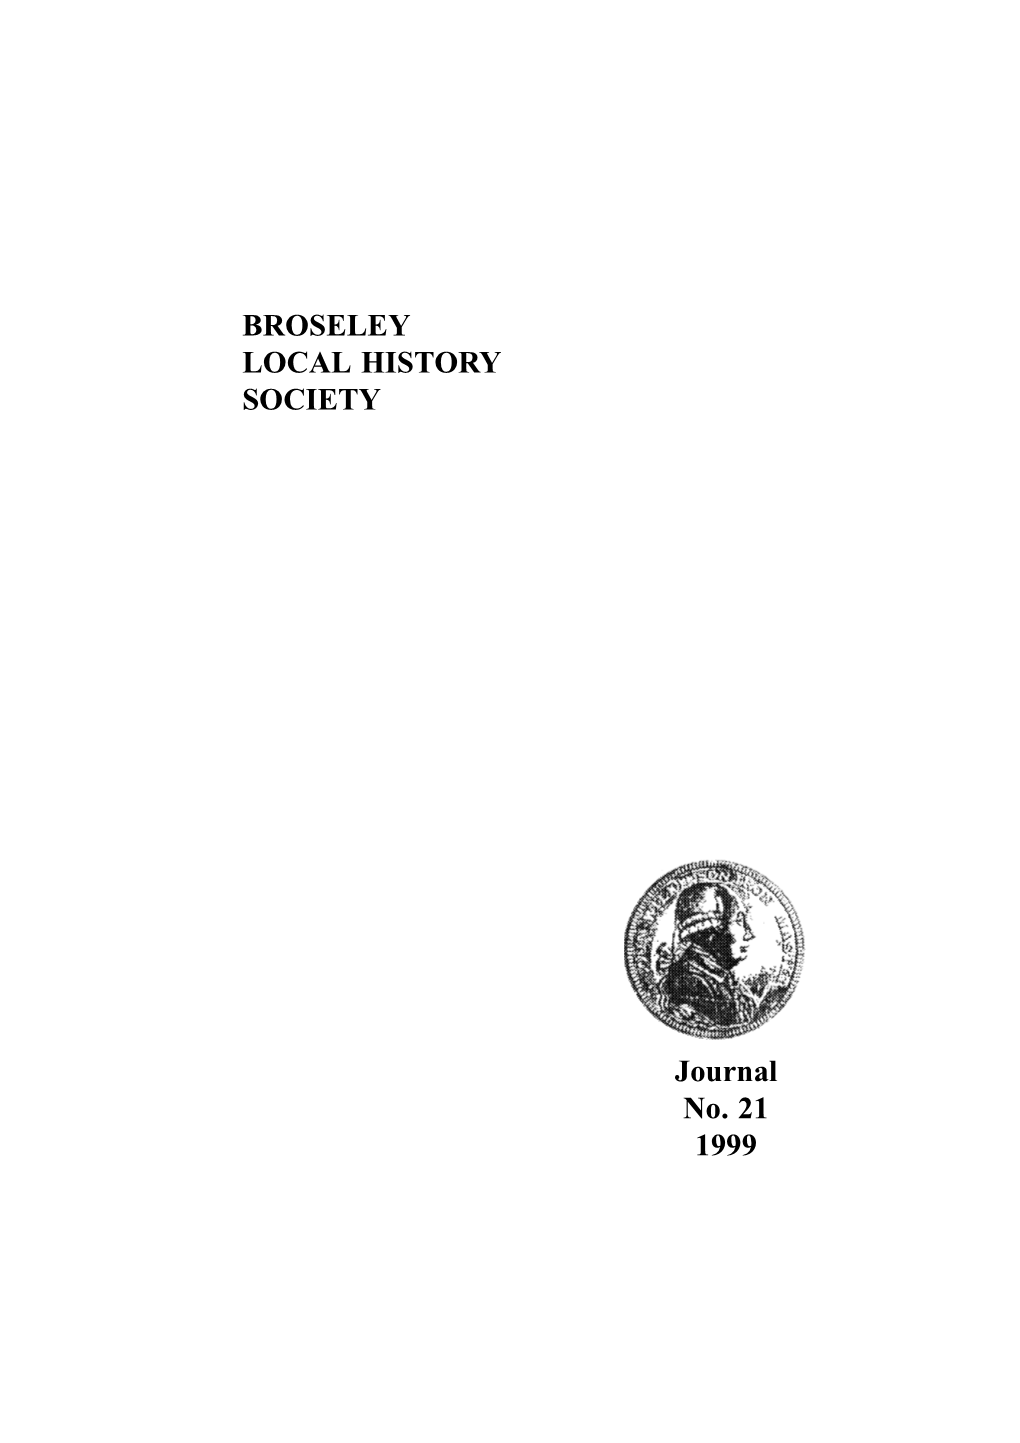 BROSELEY LOCAL HISTORY SOCIETY Journal No. 21 1999